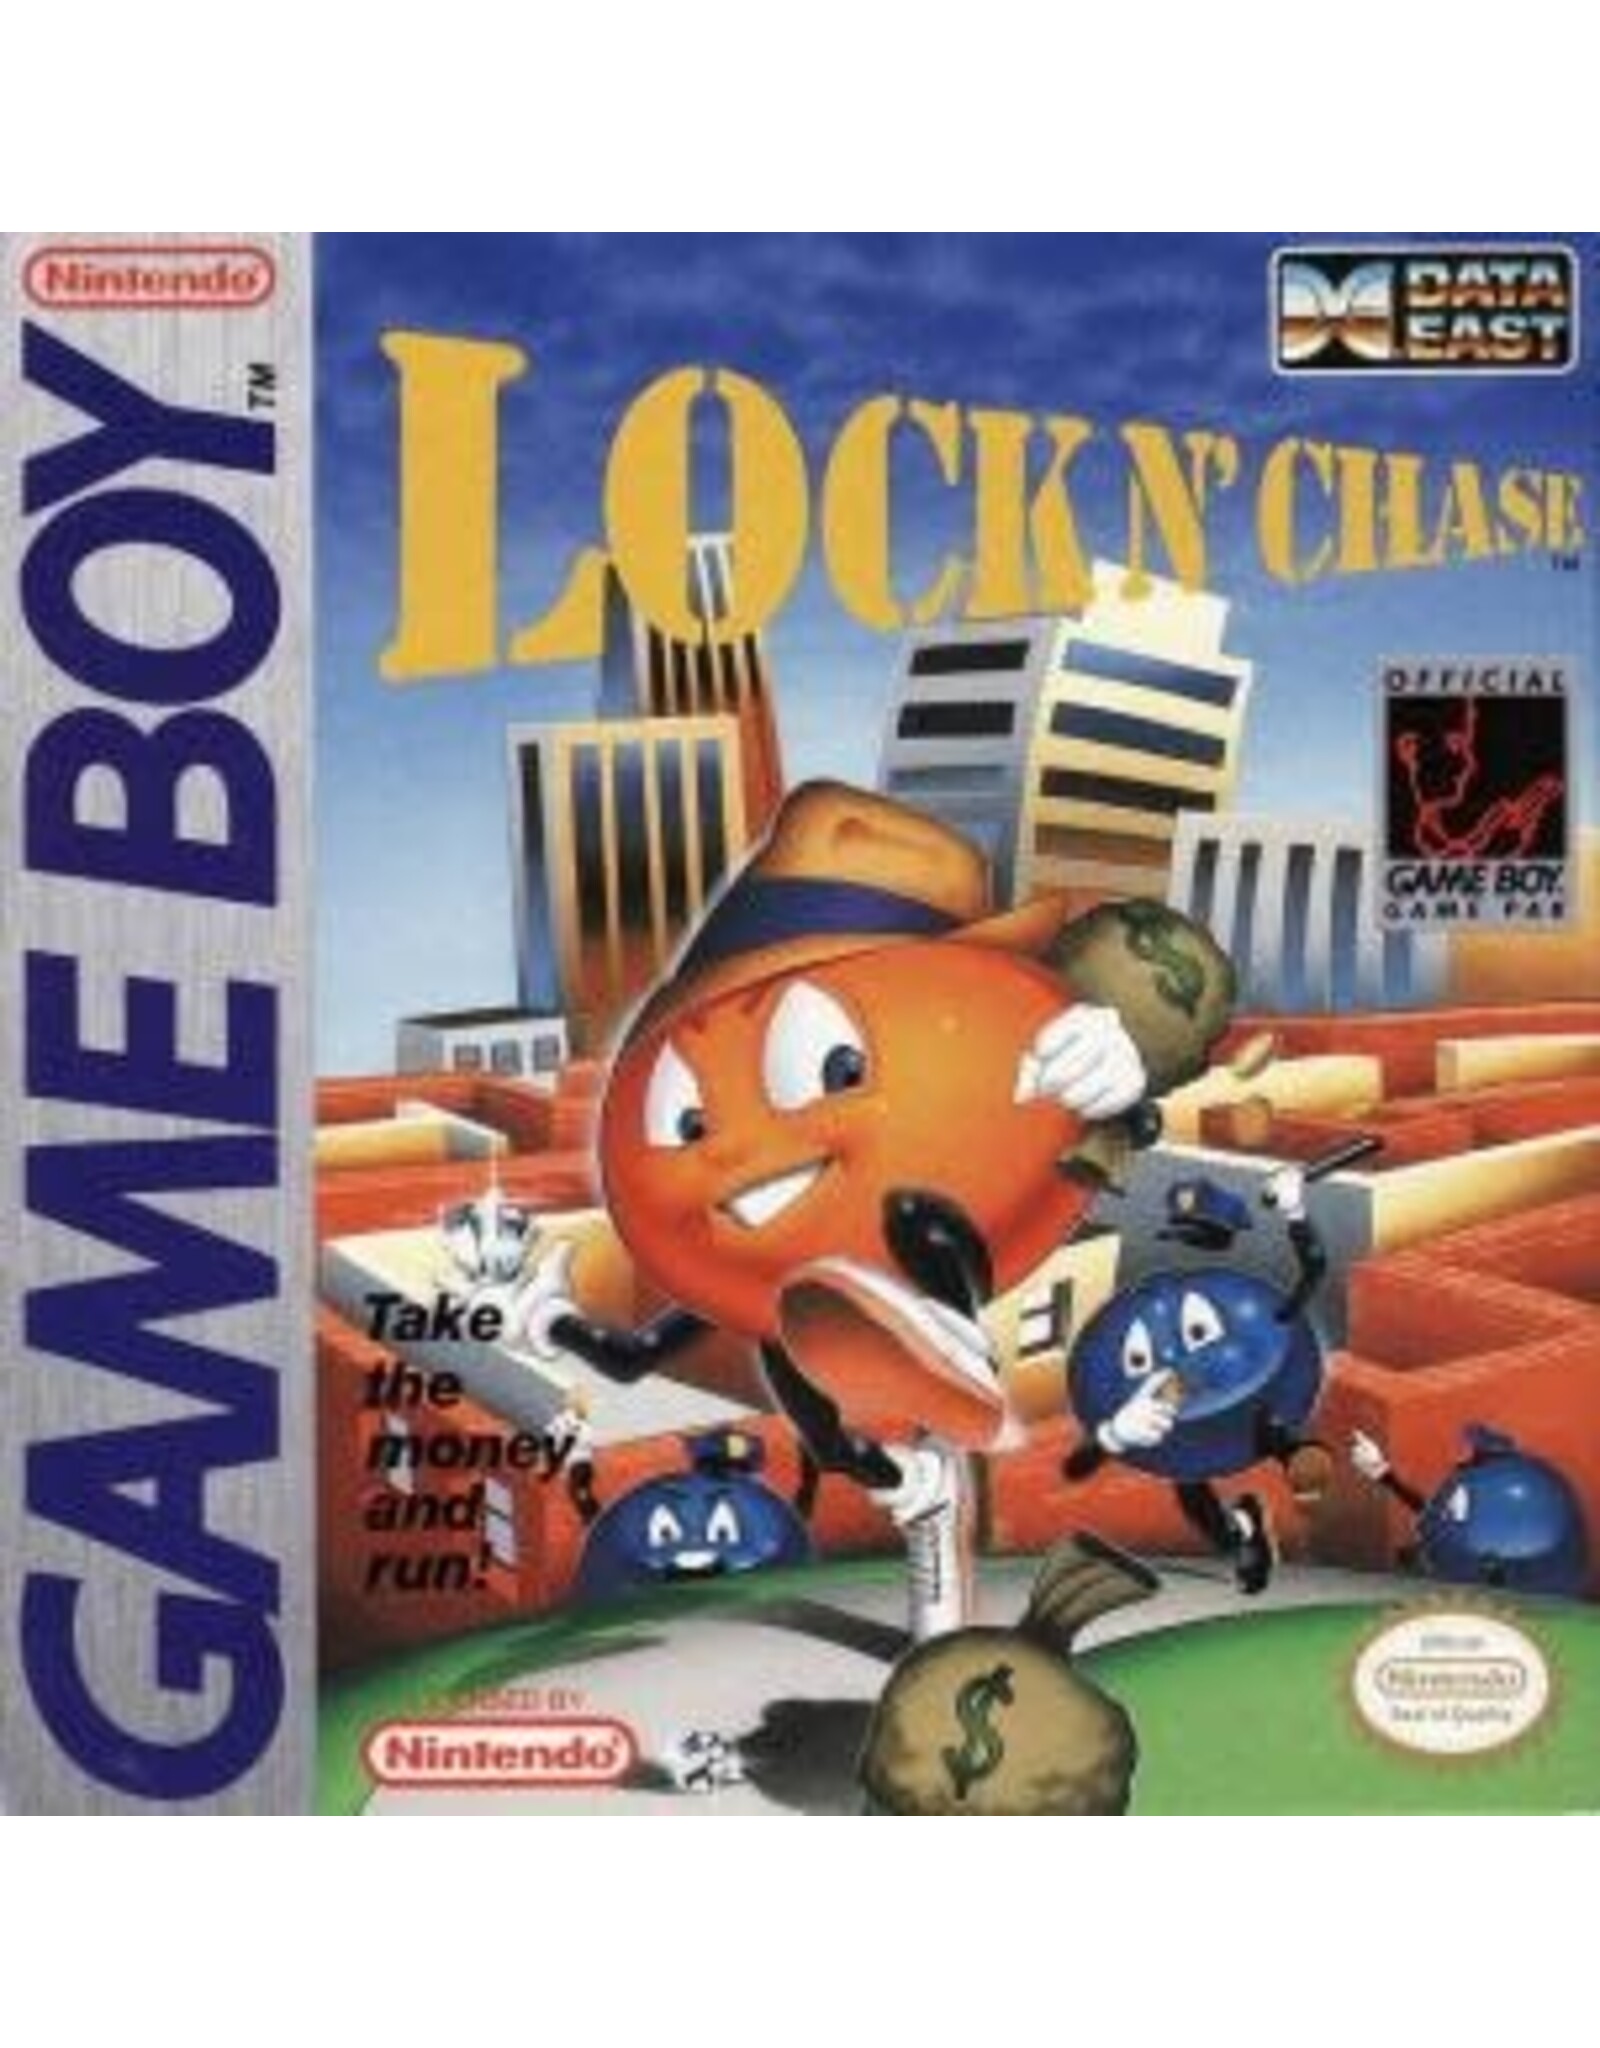 Game Boy Lock n Chase (CiB, Damaged Box)